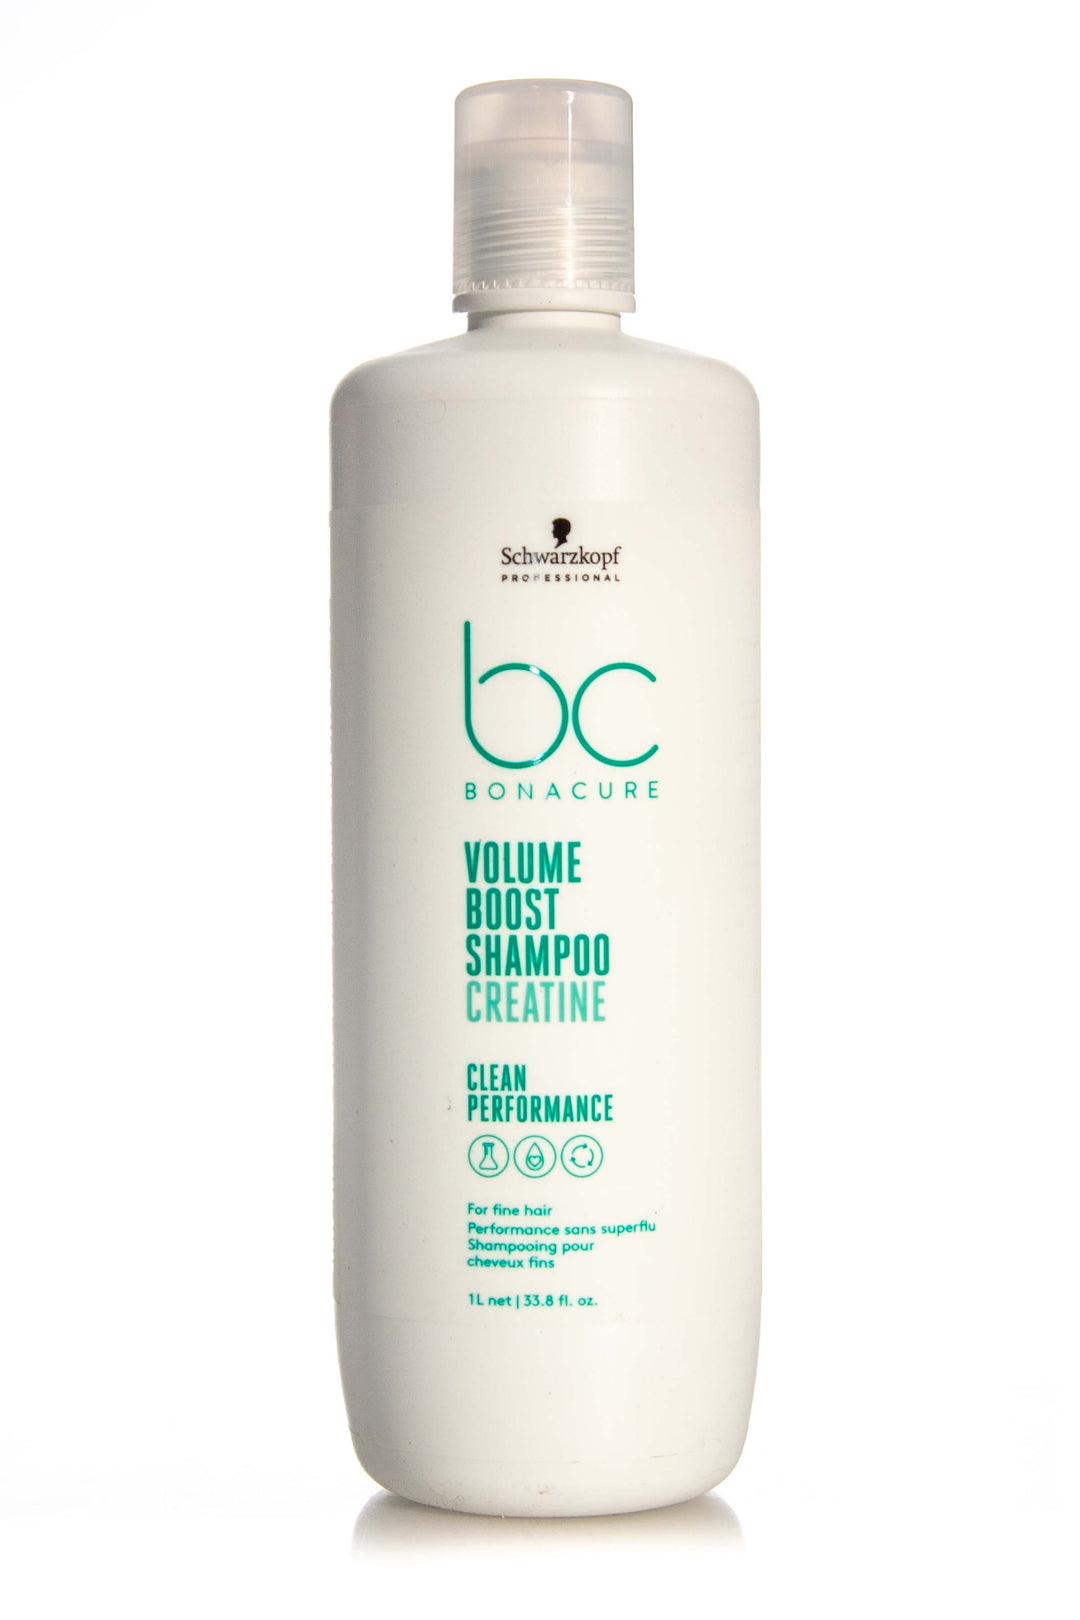 Schwarzkopf Bonacure Volume Boost Shampoo